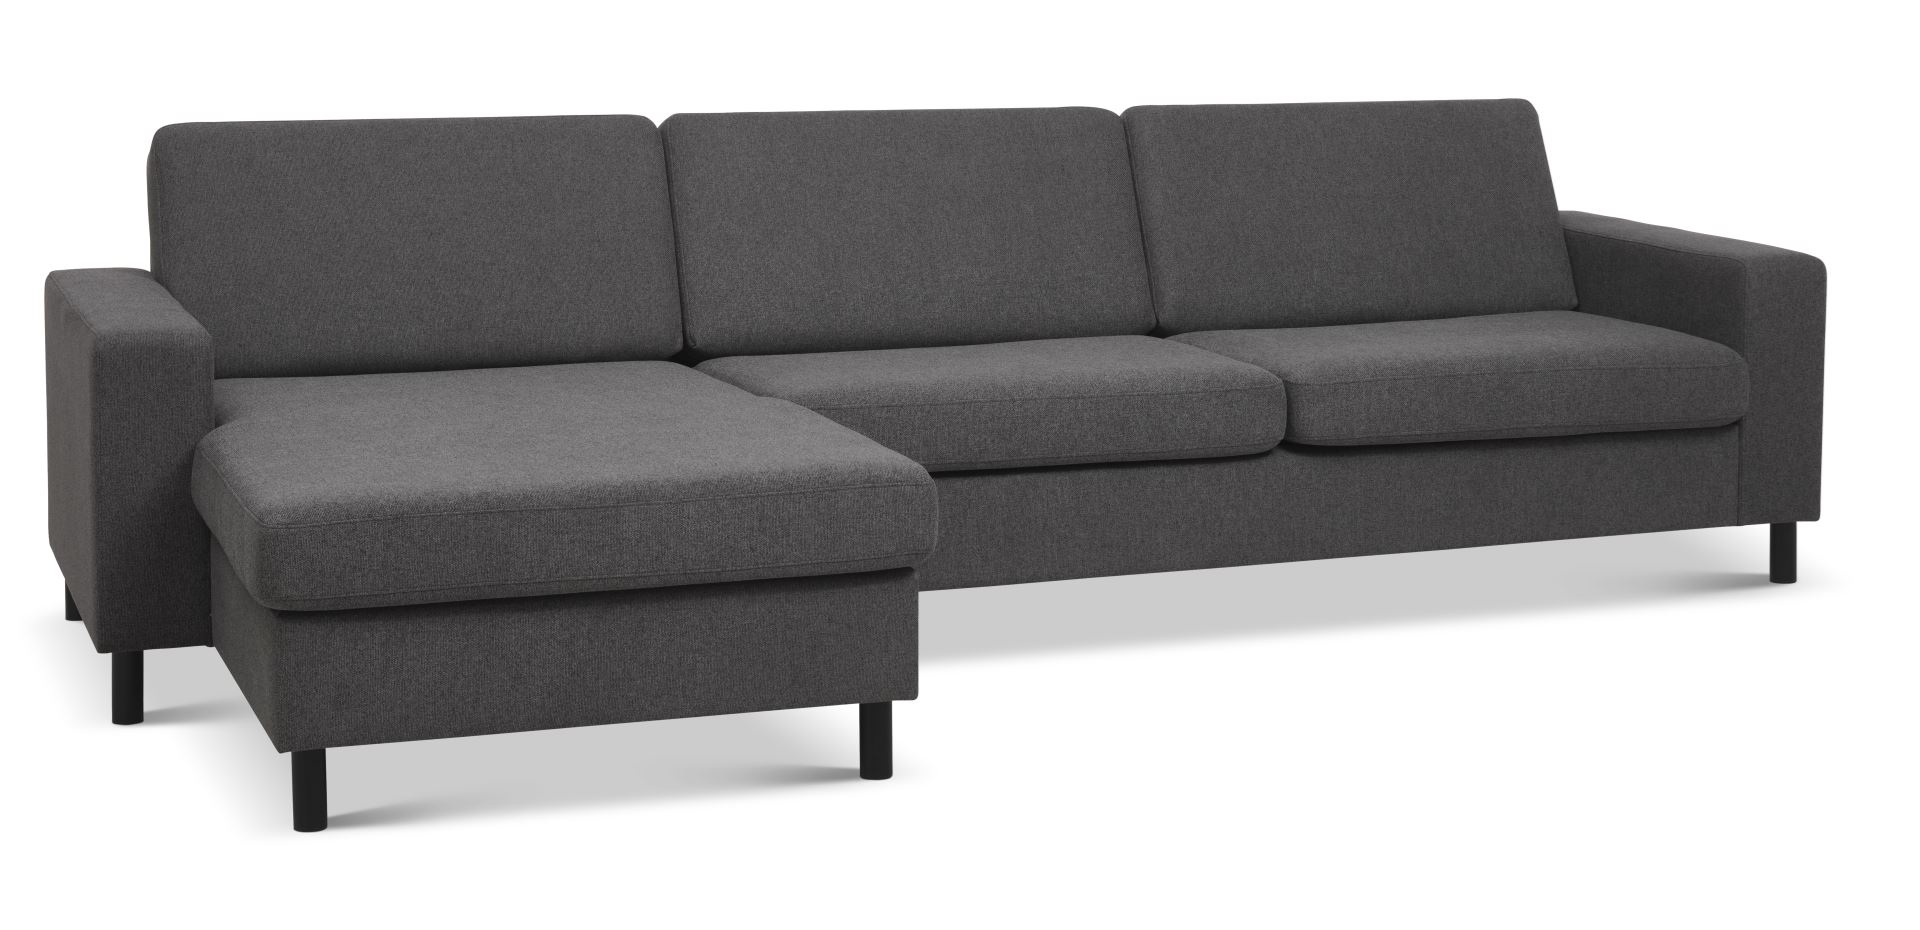 Pan set 8 3D XL sofa, m. chaiselong - antracitgrå polyester stof og sort træ